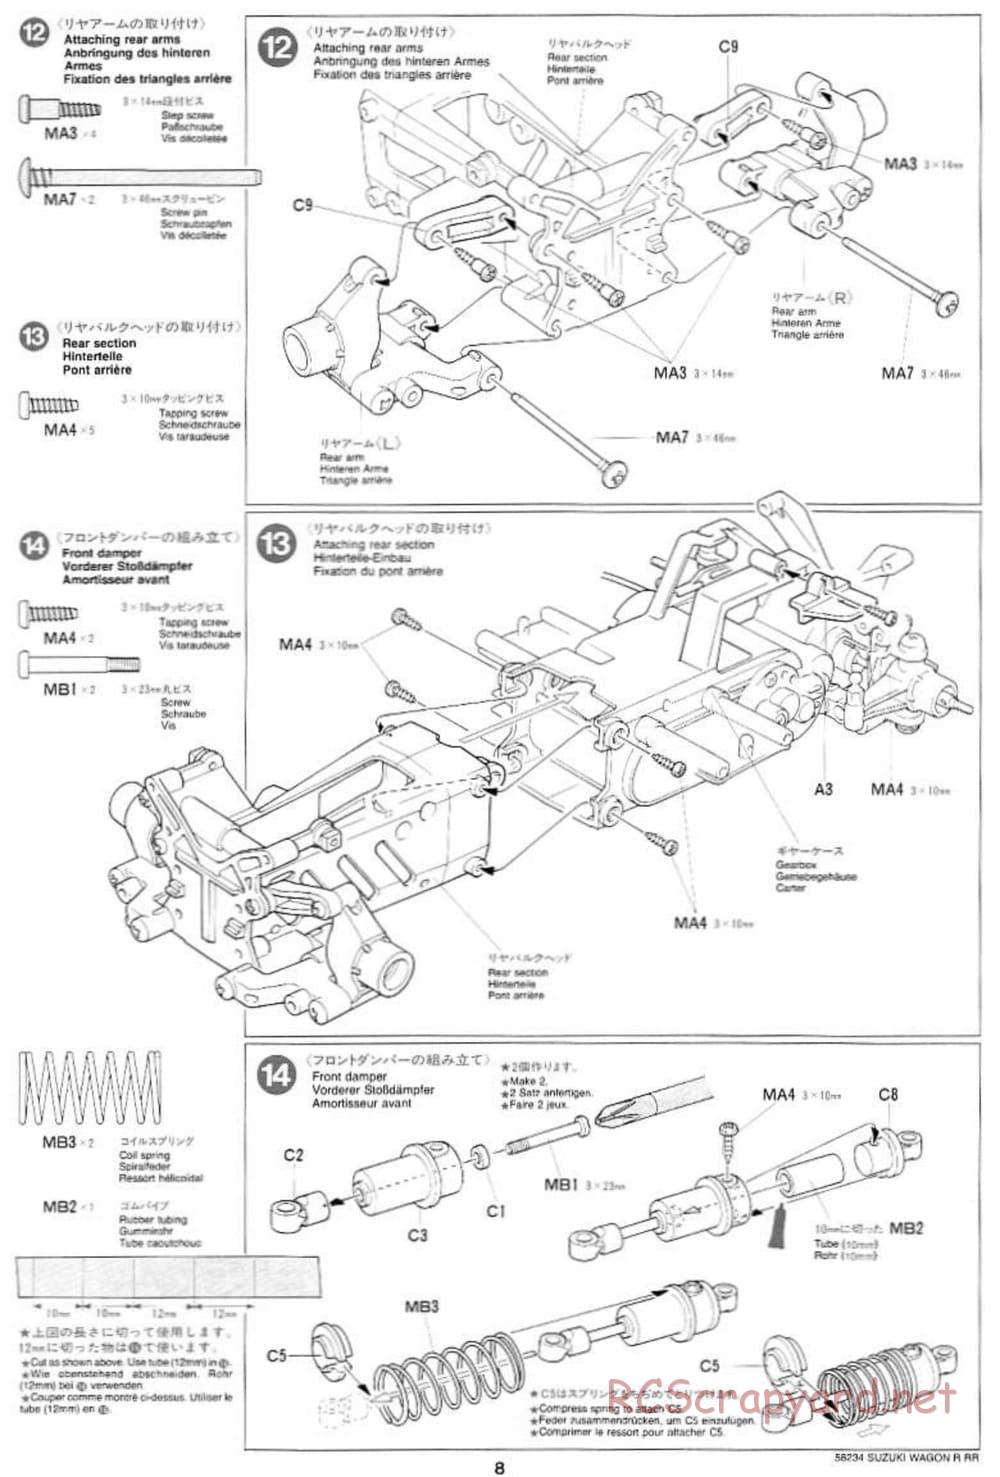 Tamiya - Suzuki WagonR-RR - M03 Chassis - Manual - Page 8